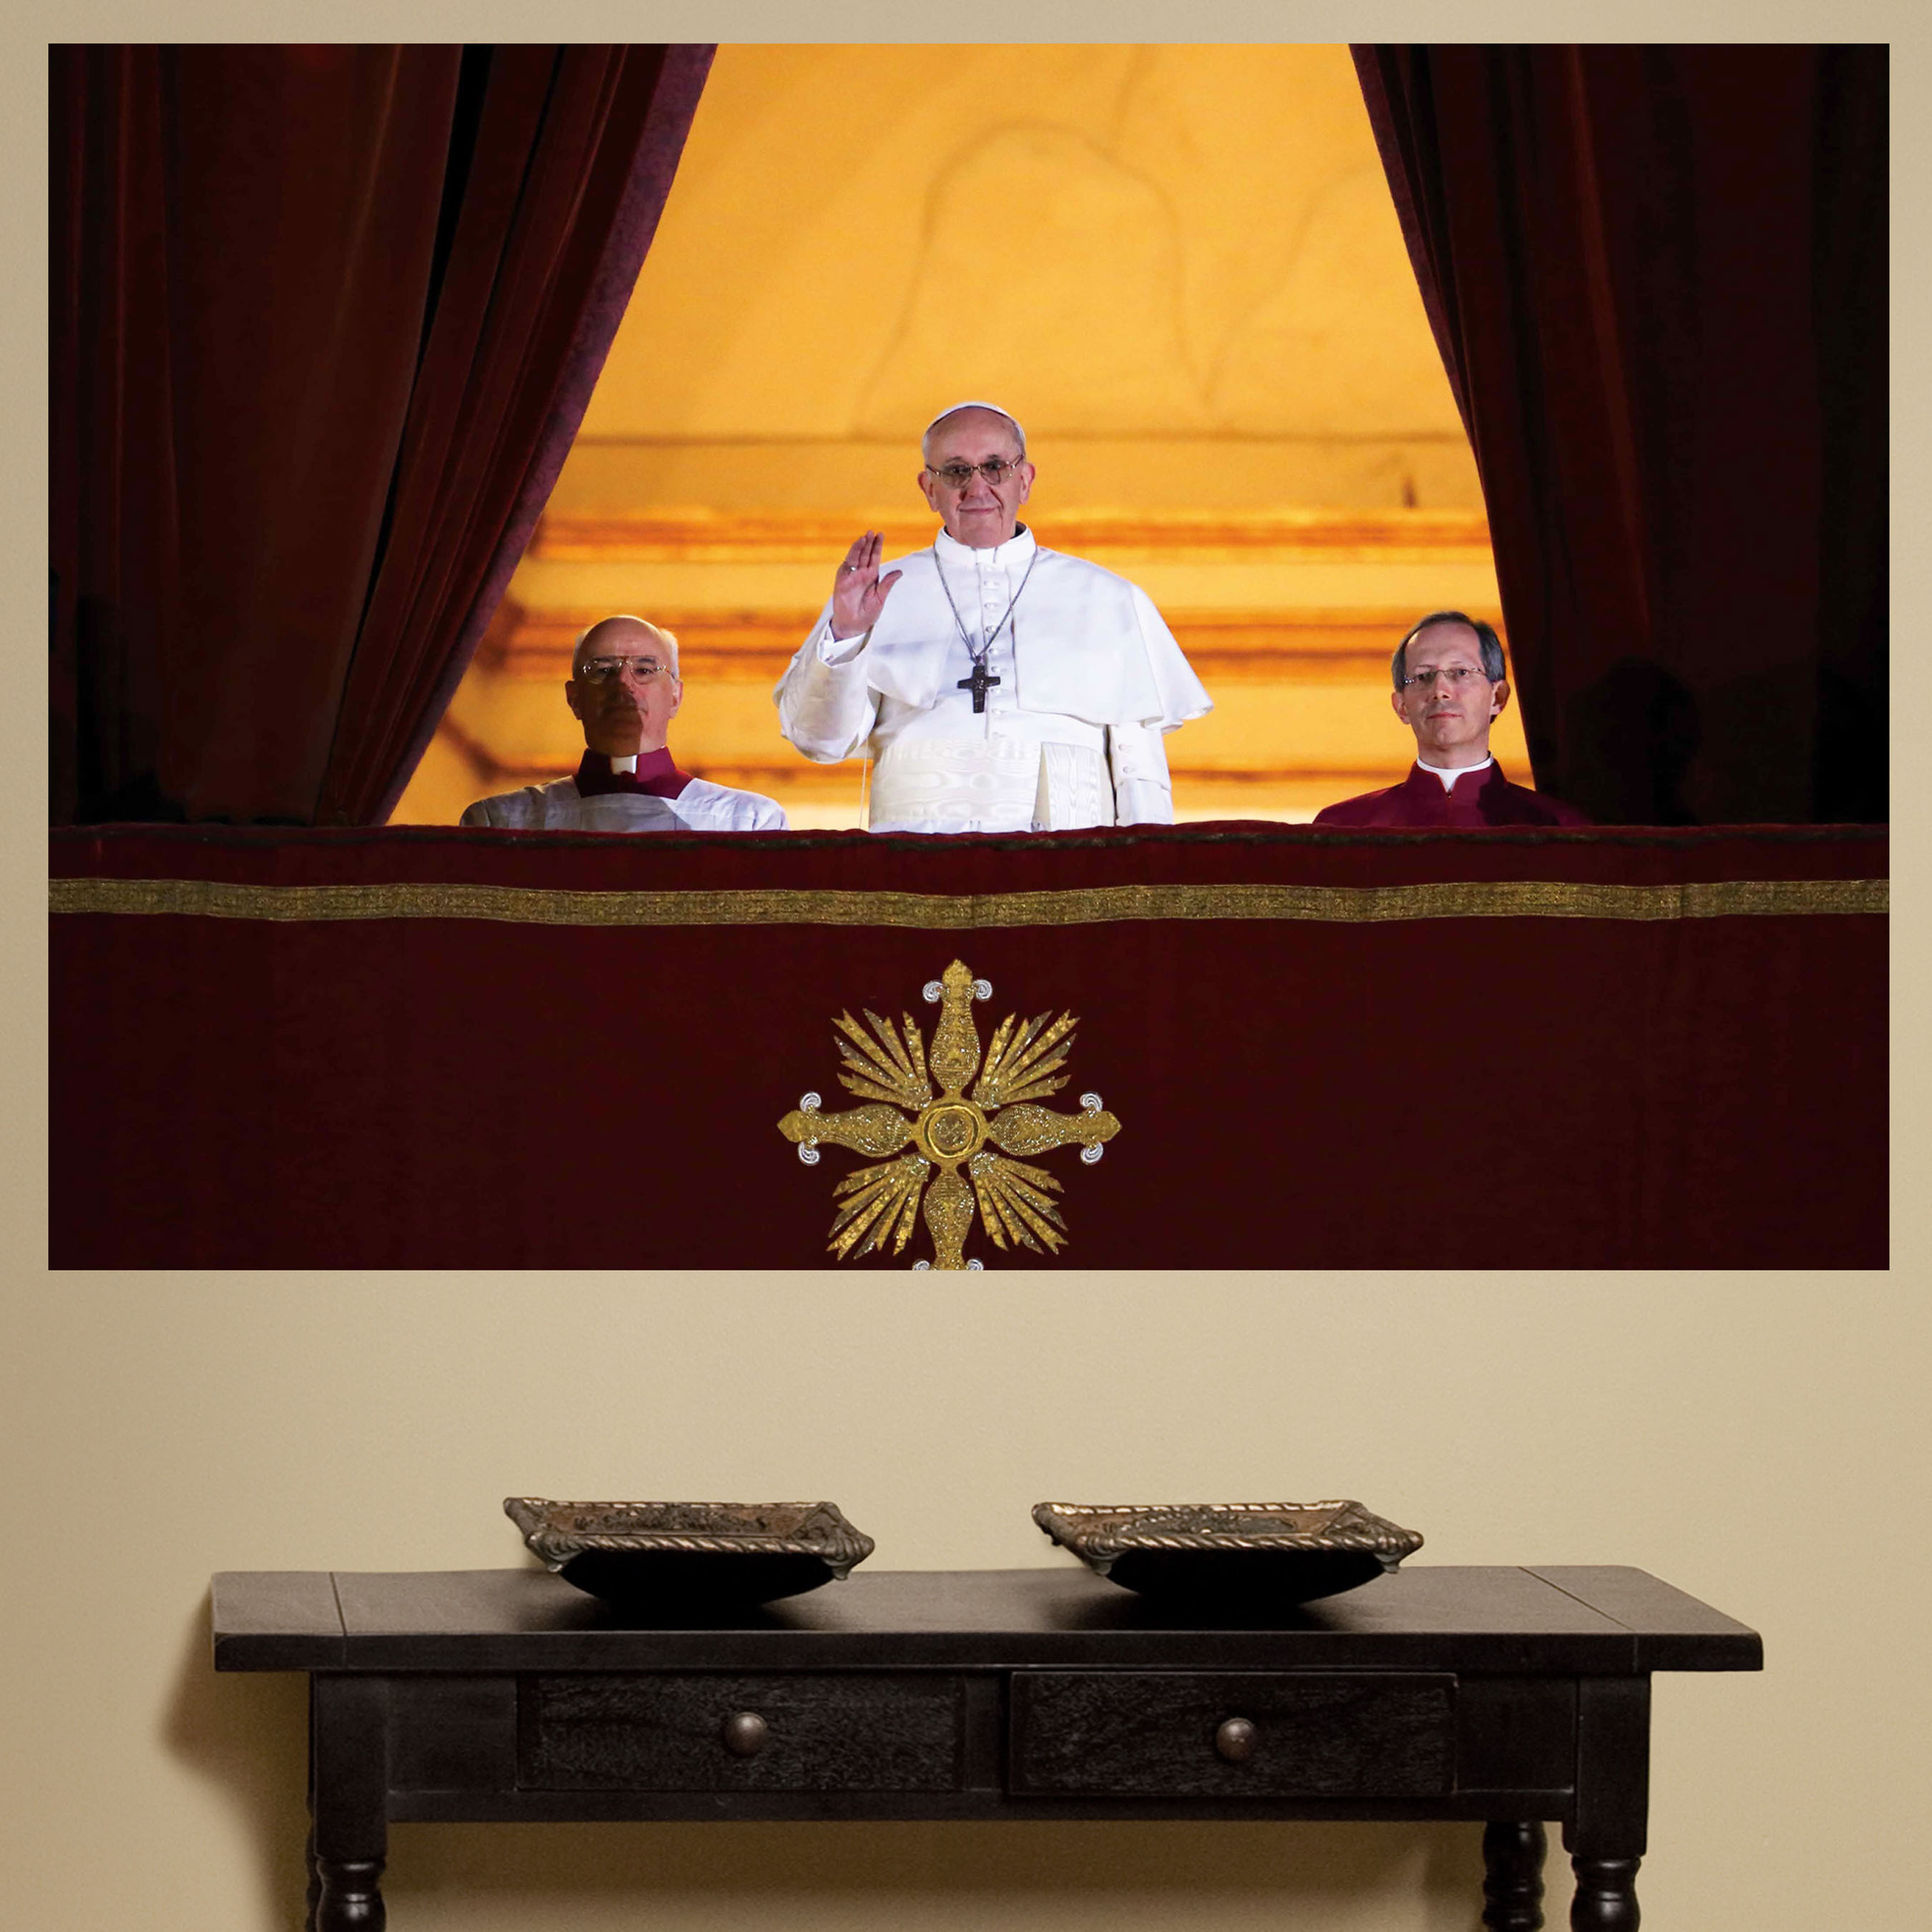 Fathead Creates Iconic Images of Pope Francis in Honor of the 266th Pope. (PRNewsFoto/Fathead) (PRNewsFoto/FATHEAD)